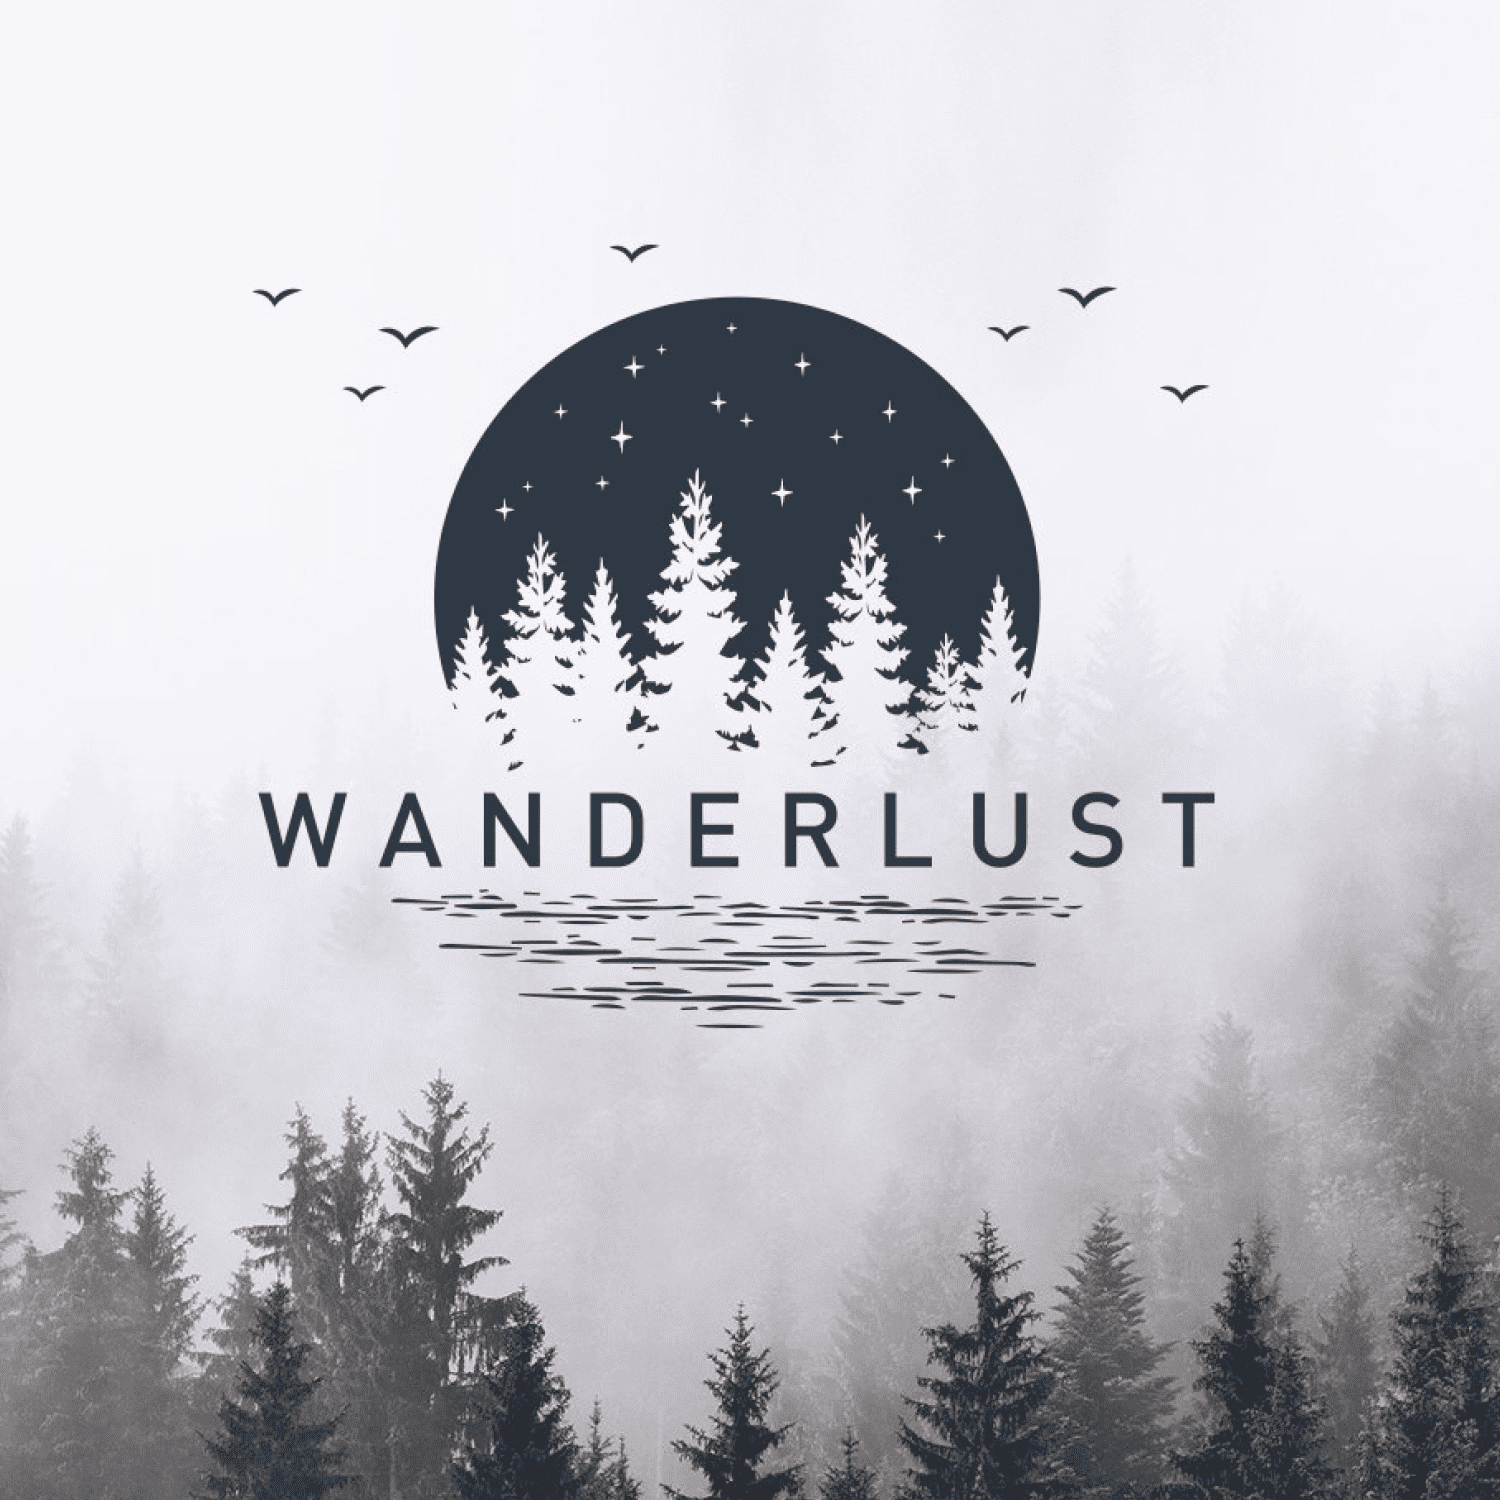 Wanderlust. 15 Double Exposure Logos cover.